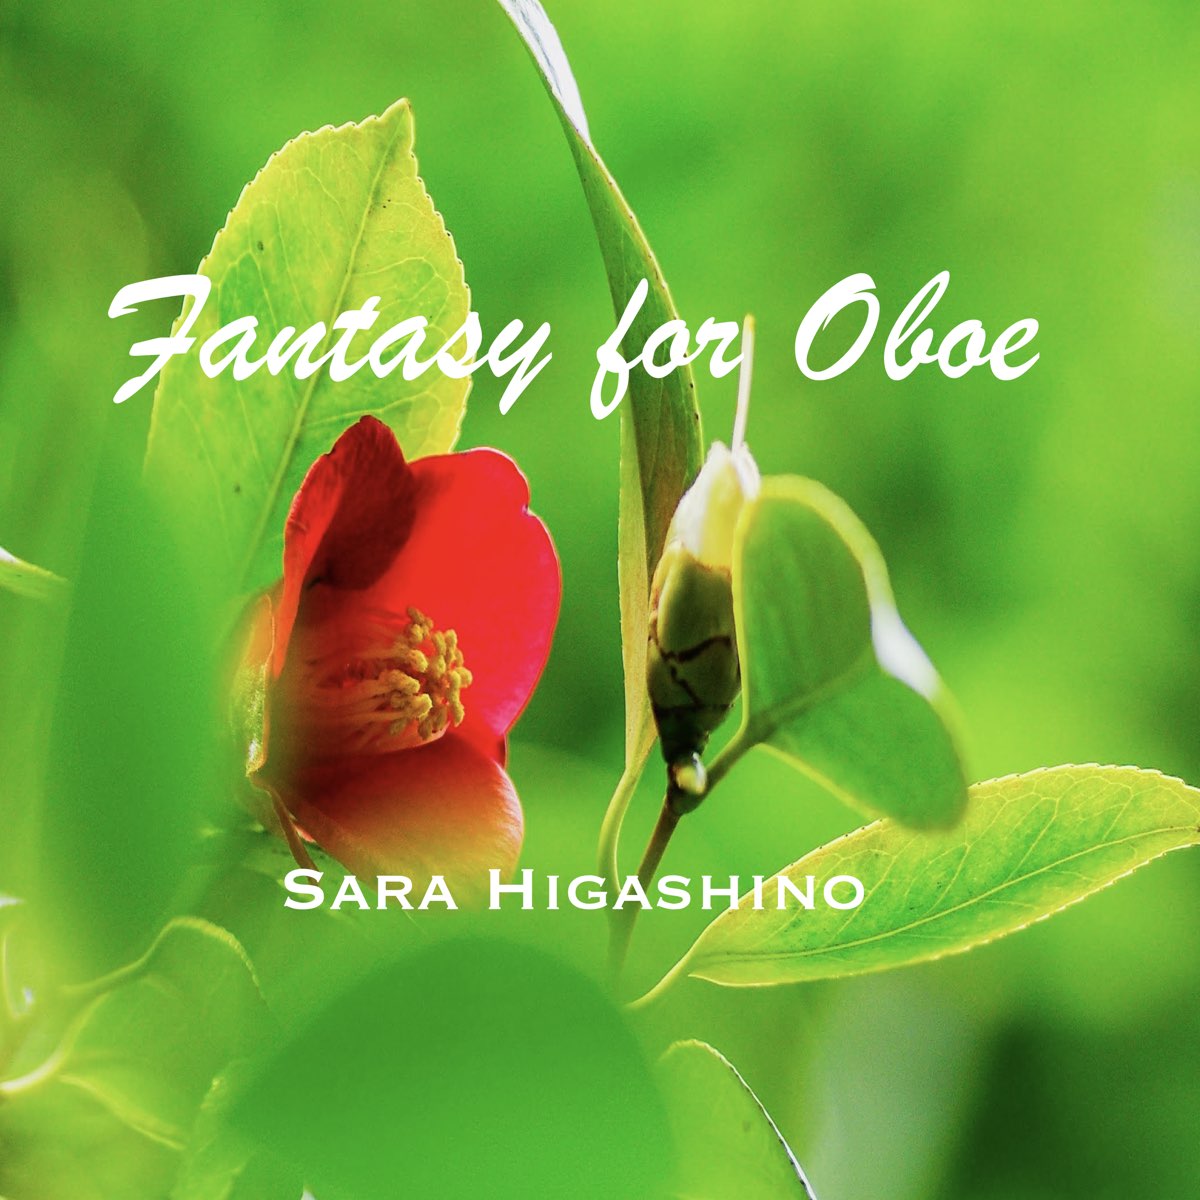 Sara Higashinoの Fantasy For Oboe をapple Musicで